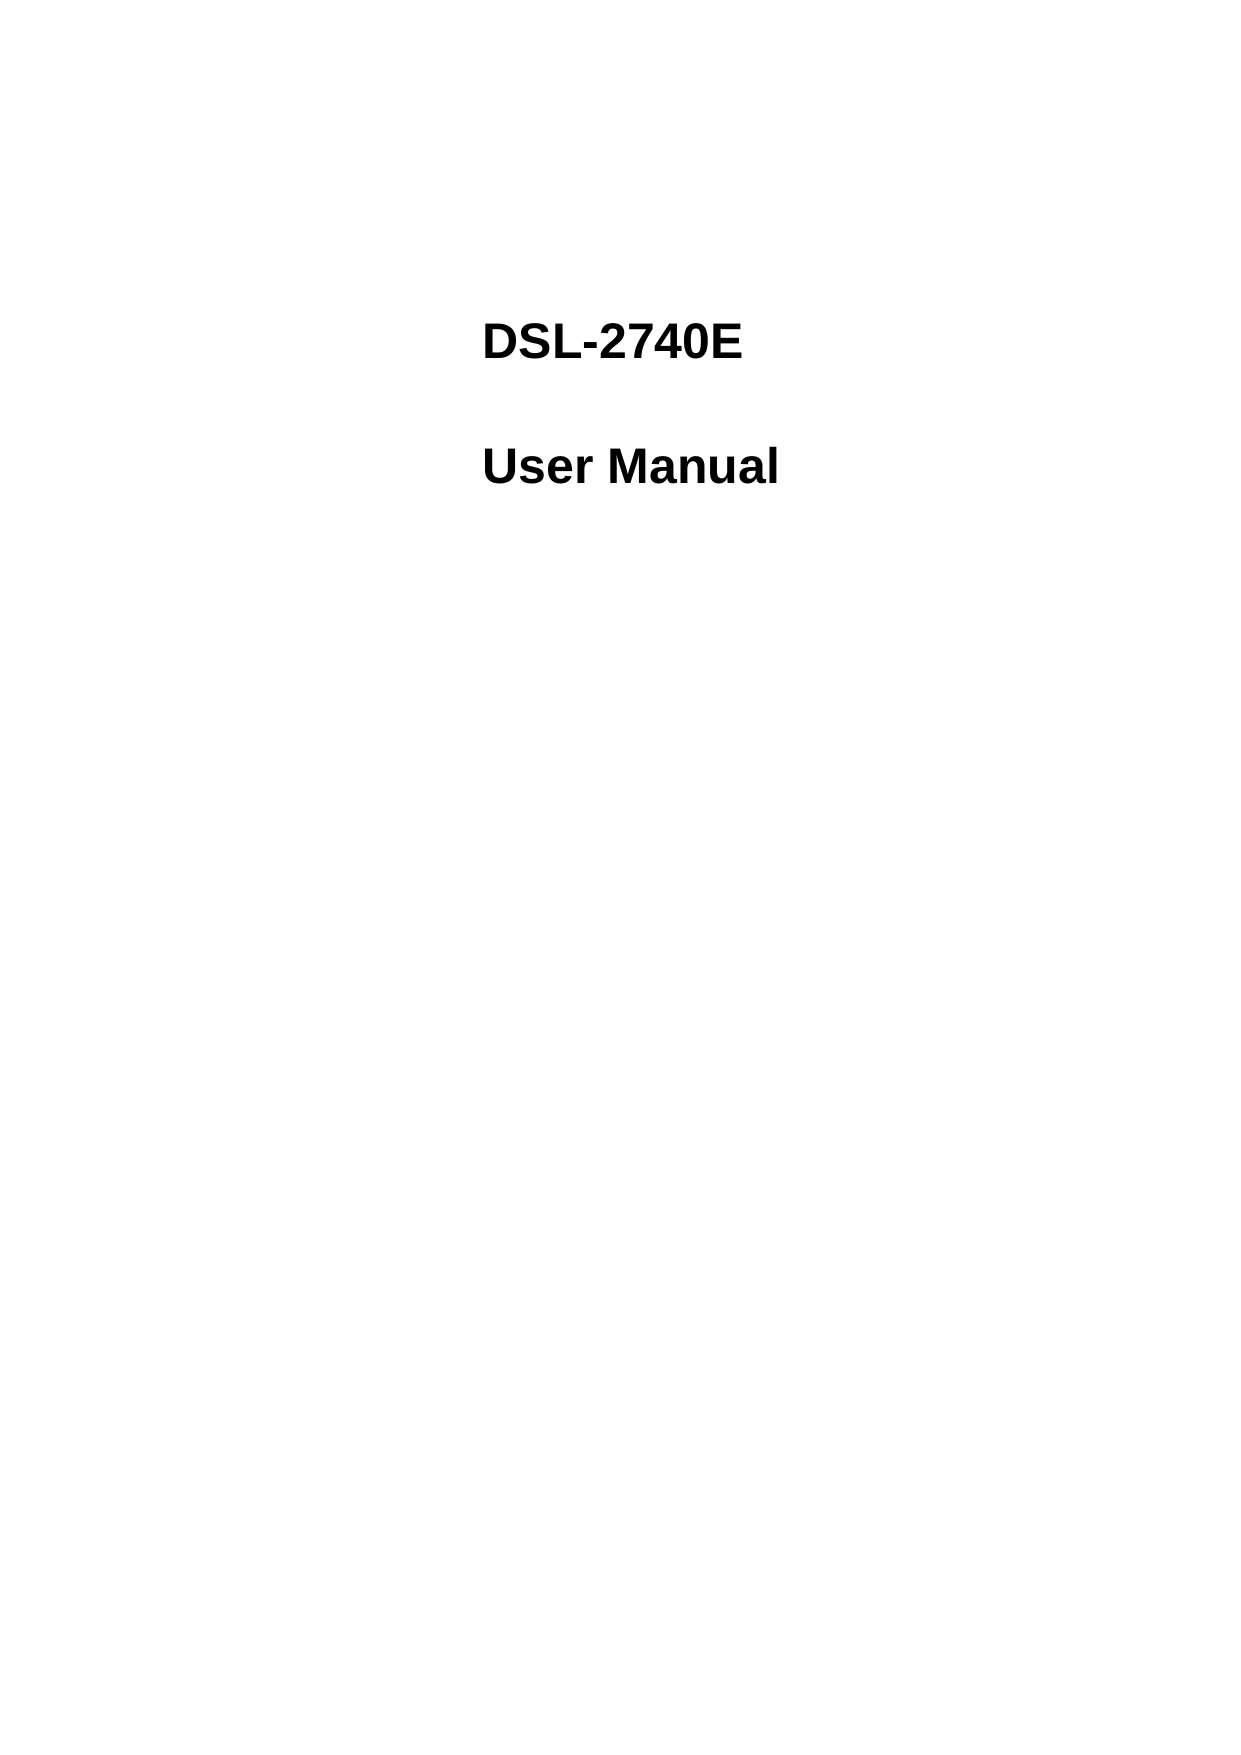     DSL-2740E User Manual   